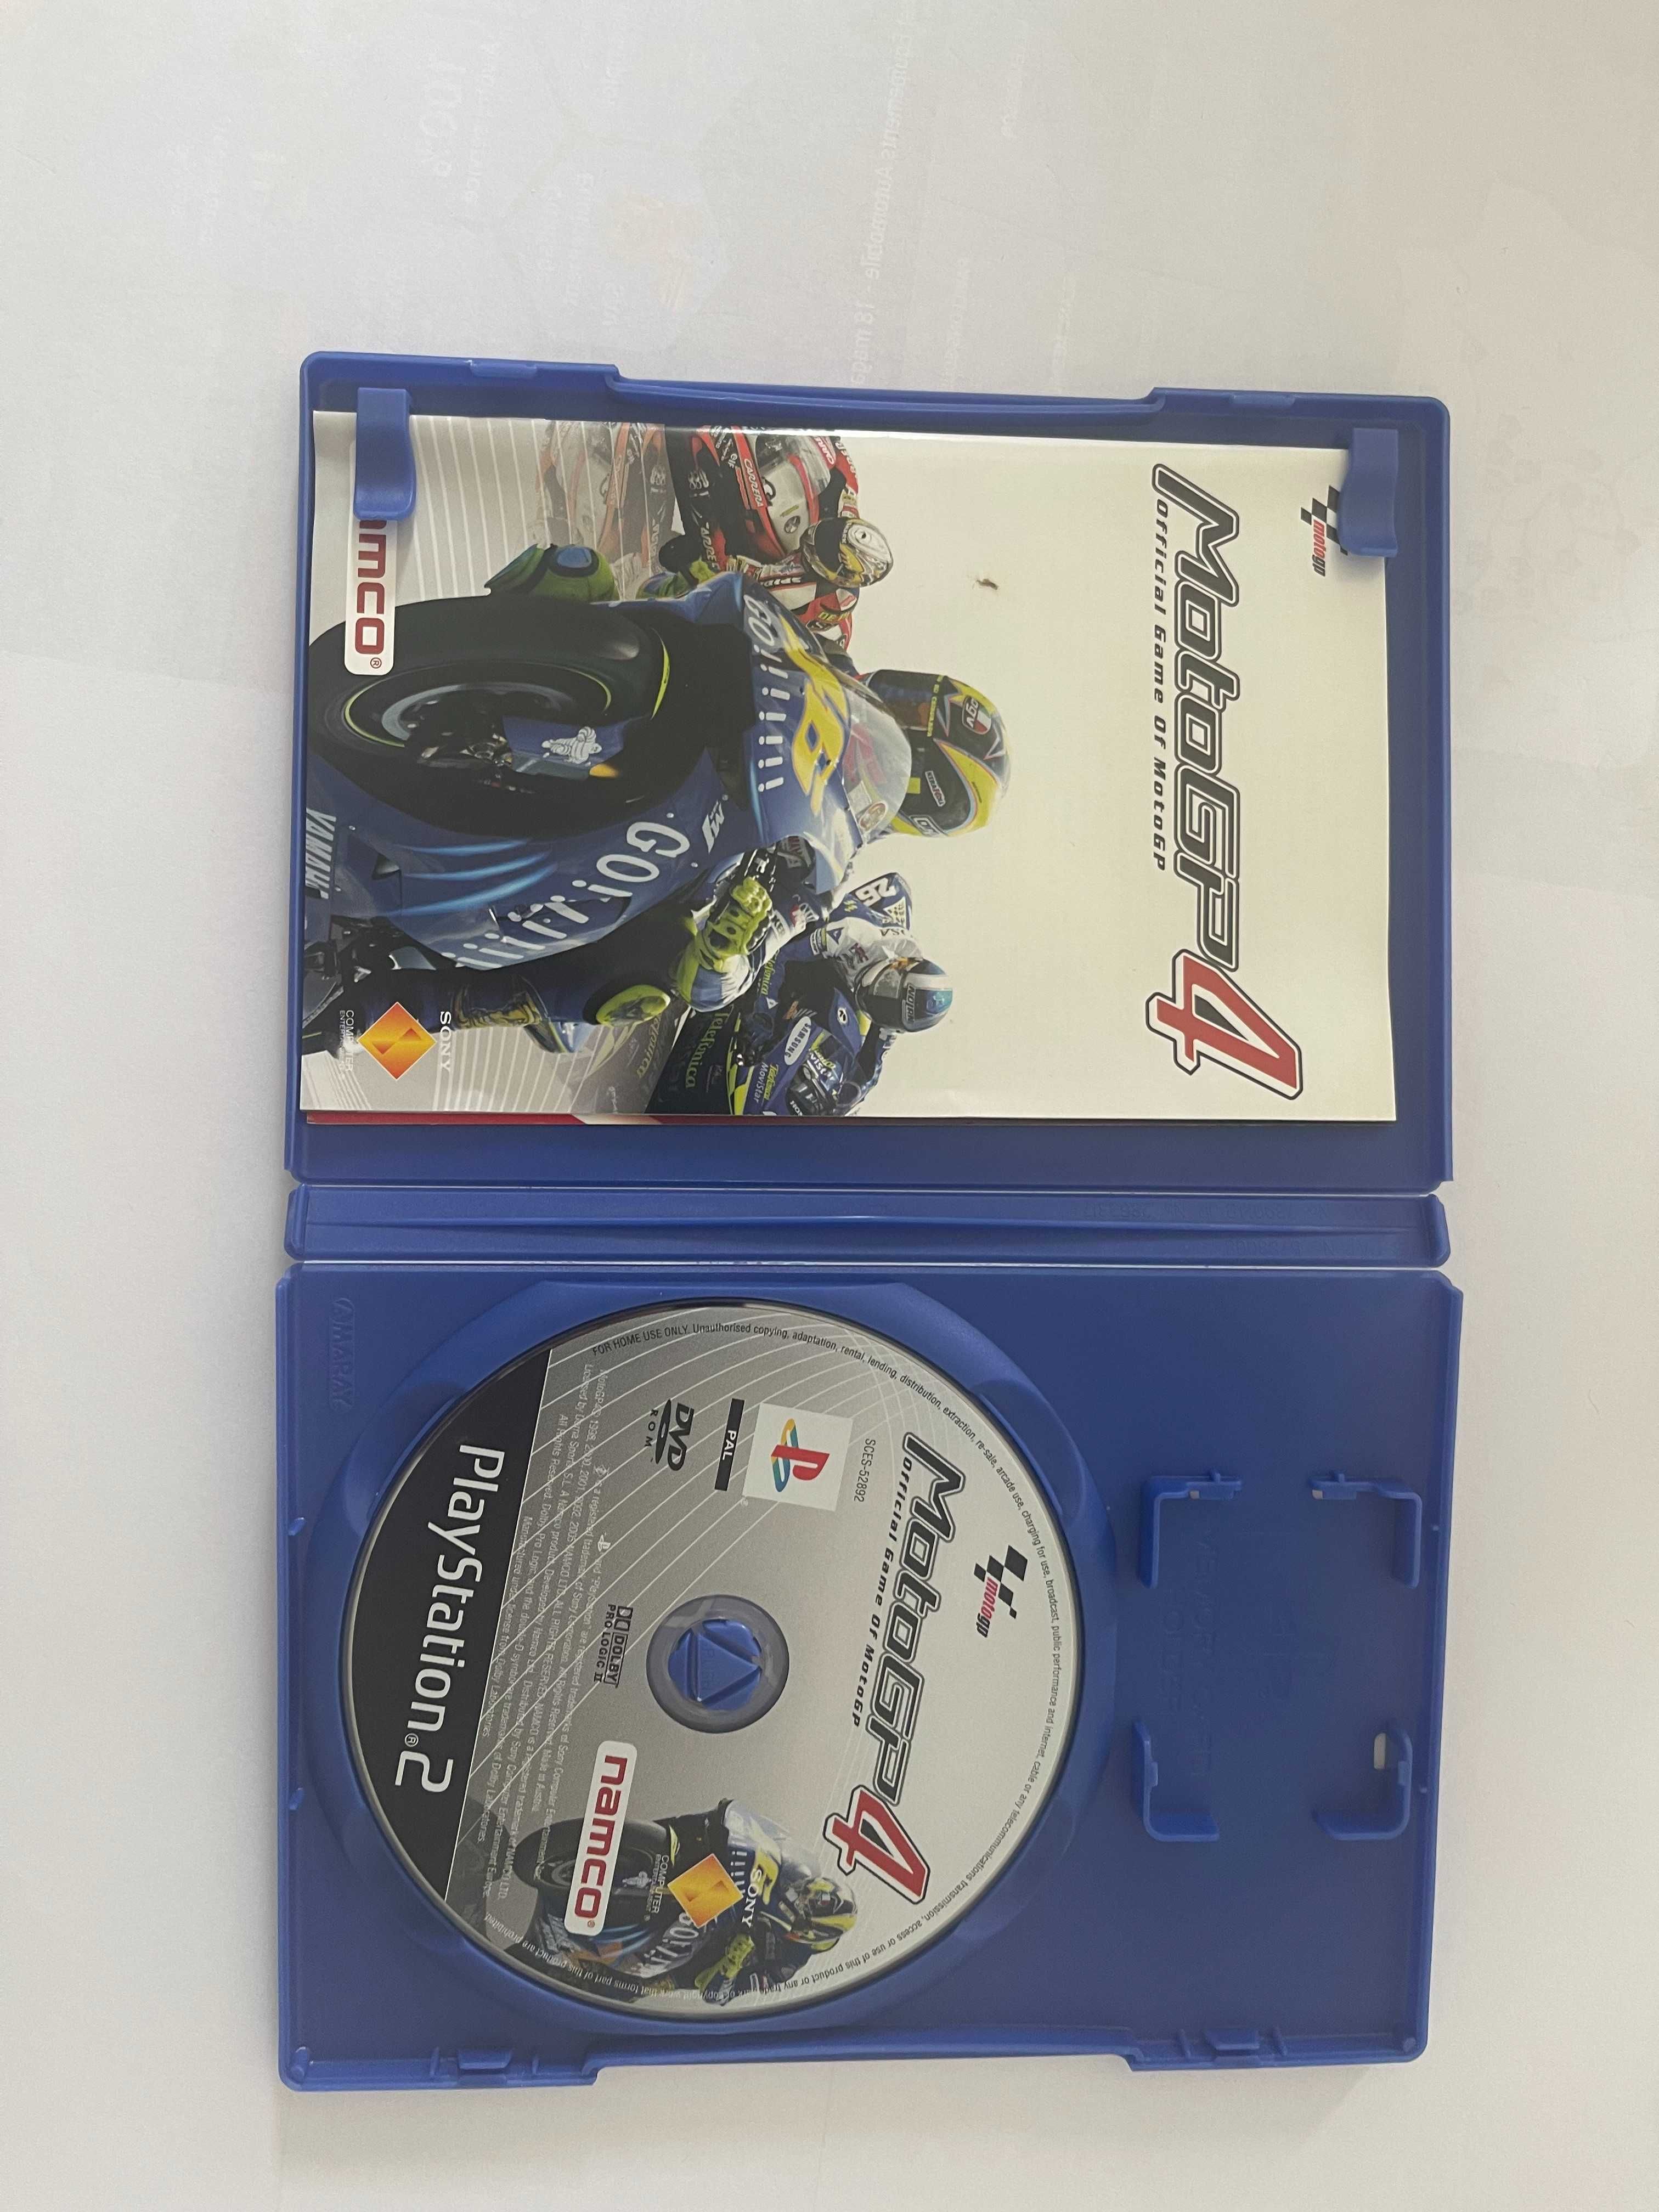 PlayStation 2 Jogo MotoGP4